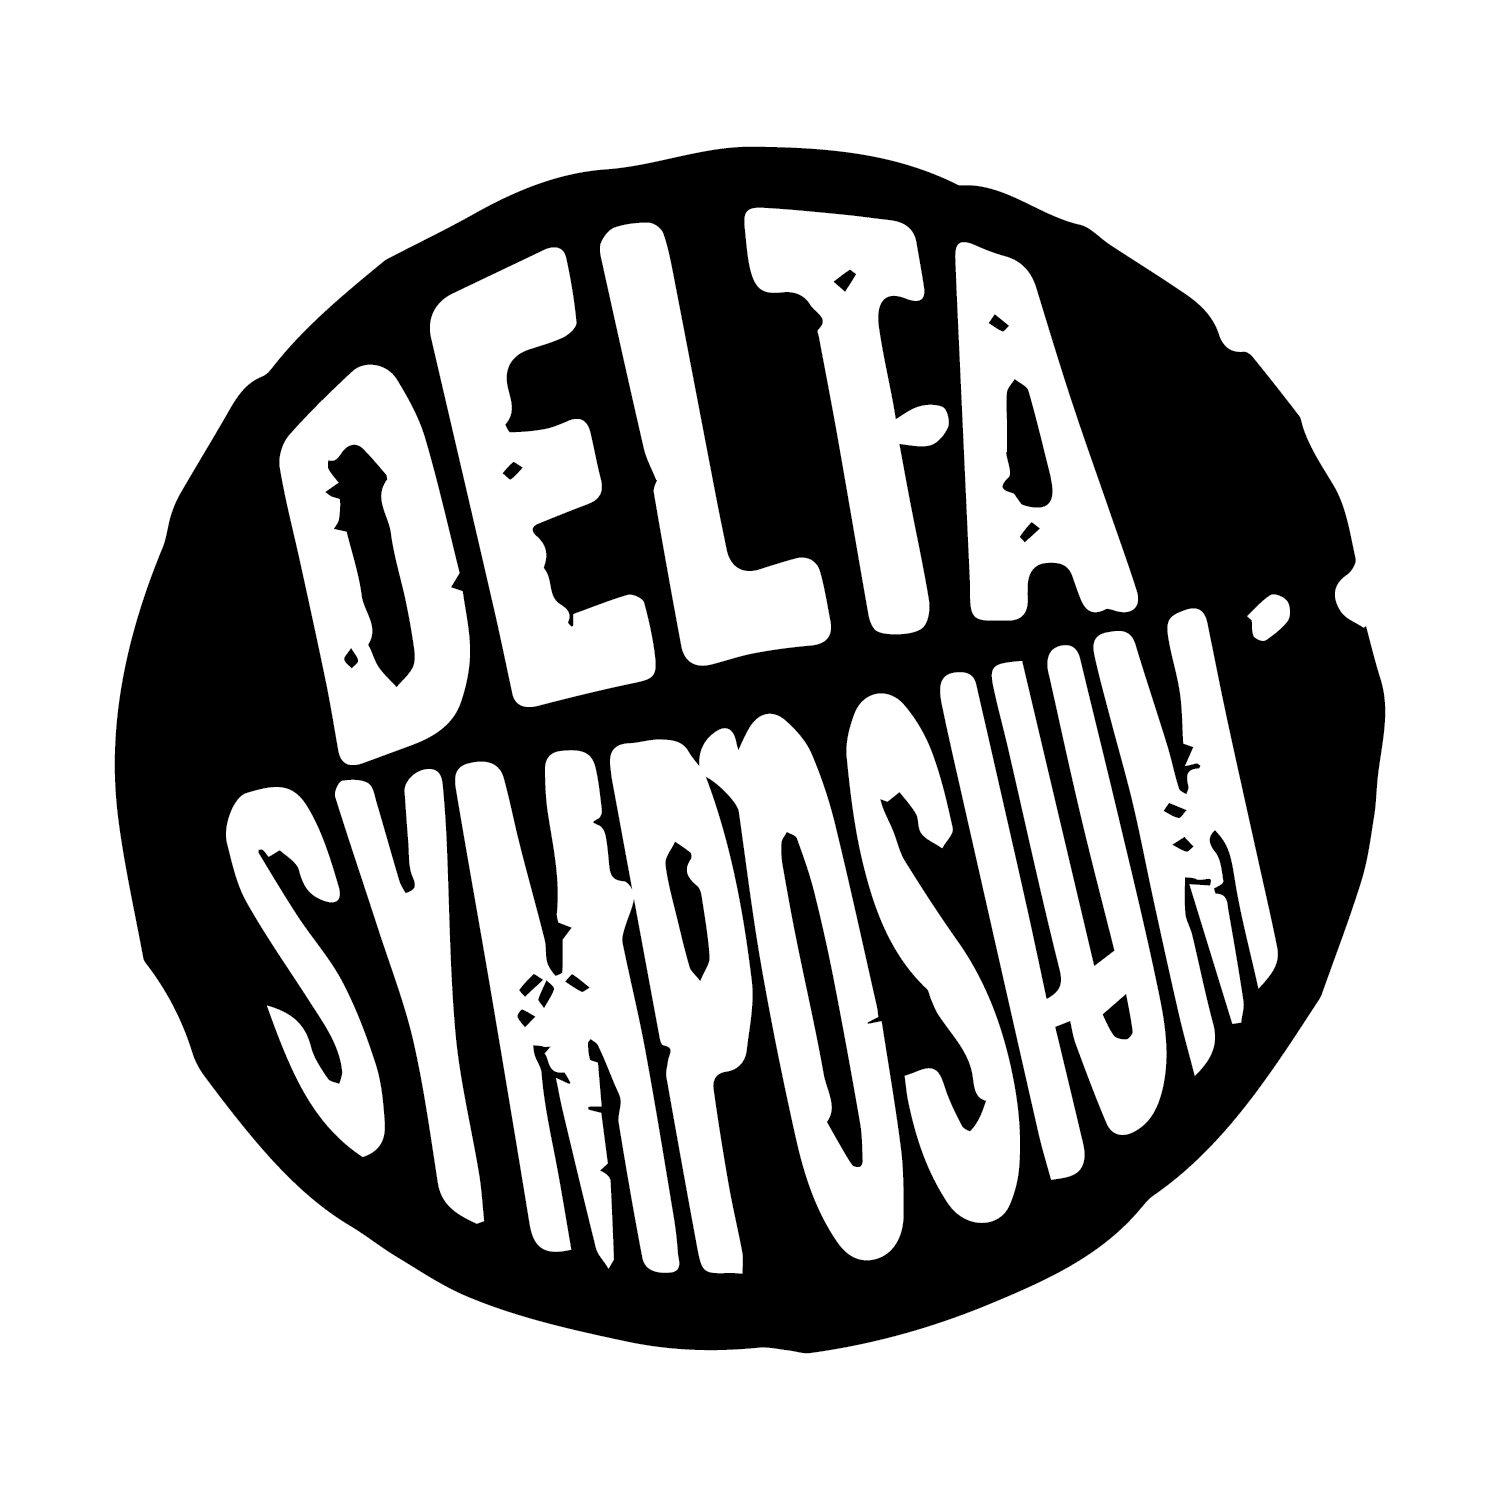 delta-symposium-logo